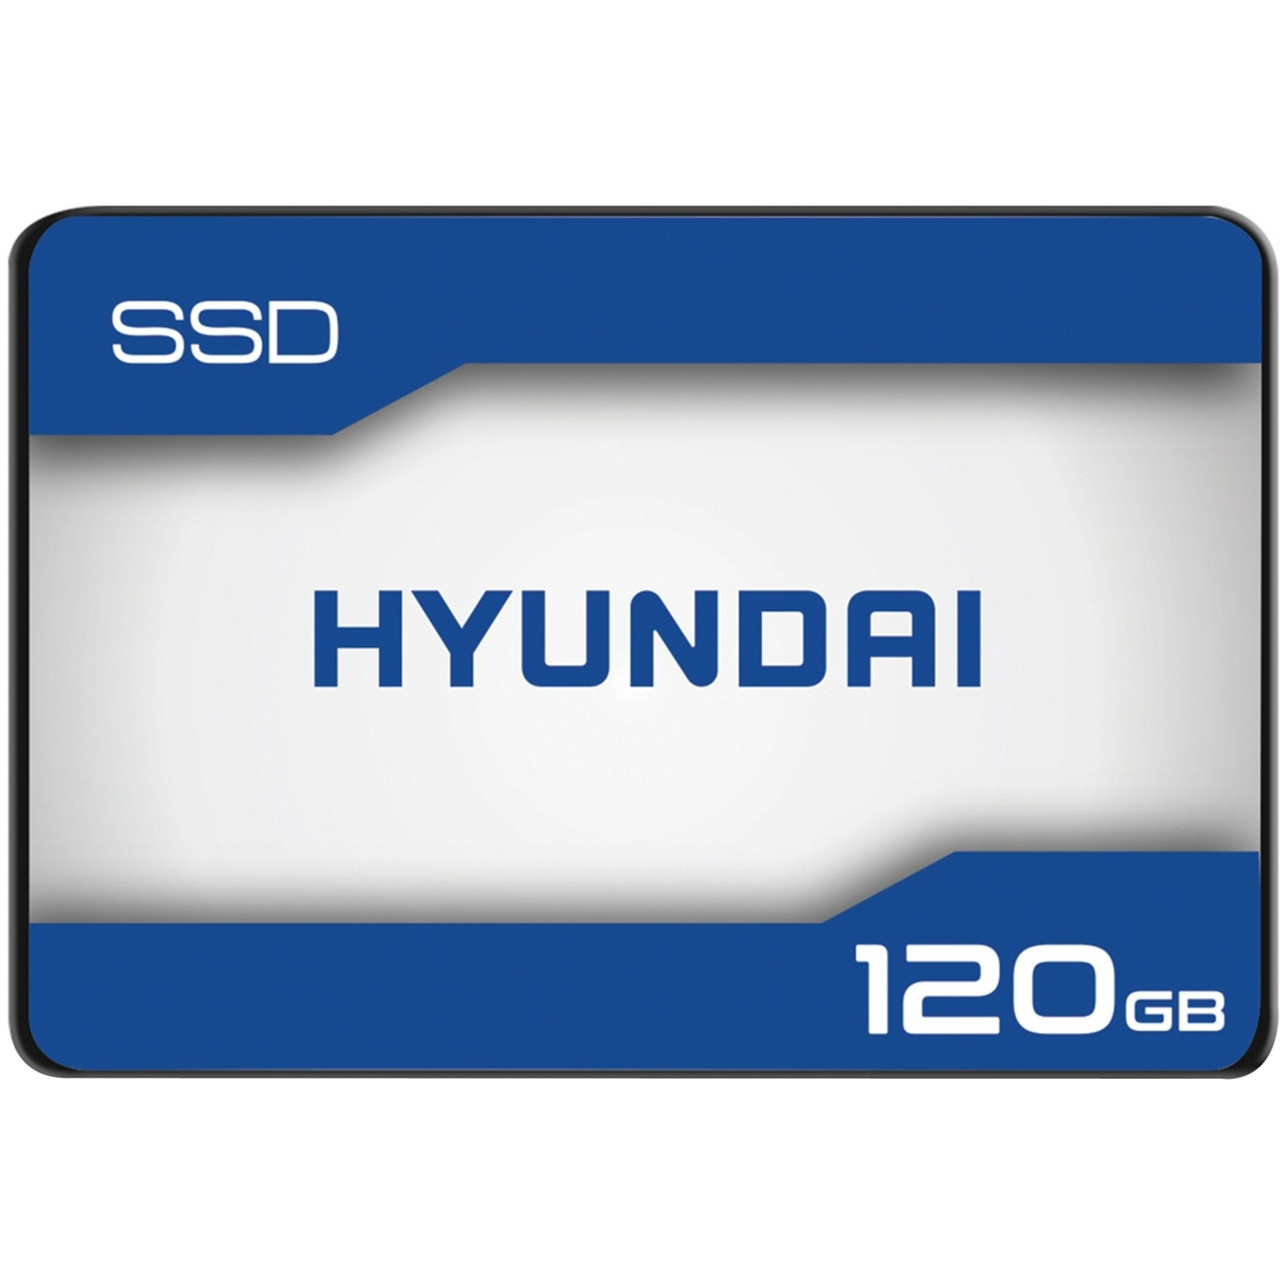 Hyundai 120GB SATA 3D TLC 2.5" Internal PC SSD, Advanced 3D NAND Flash